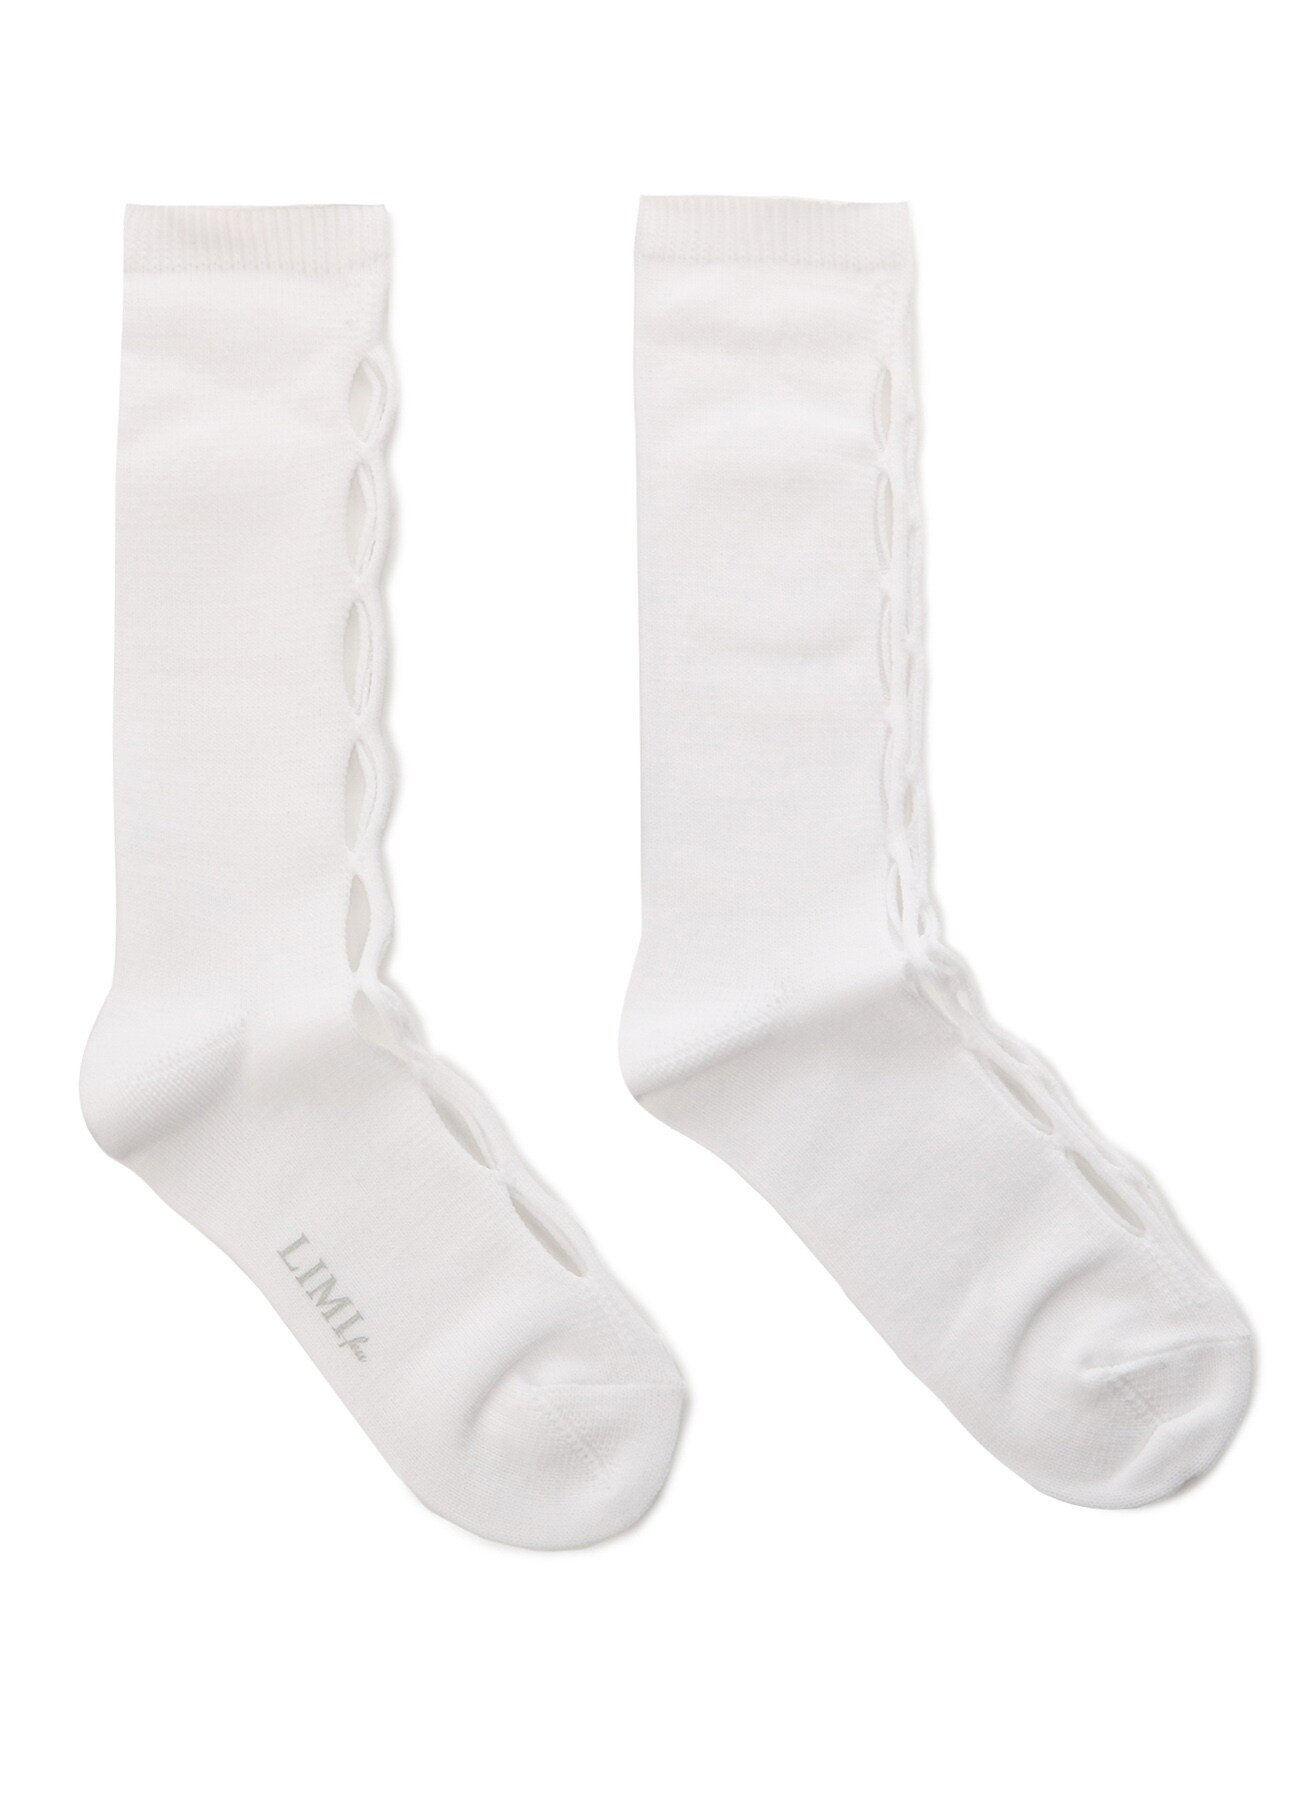 Ny/Yarn Torsion Socks